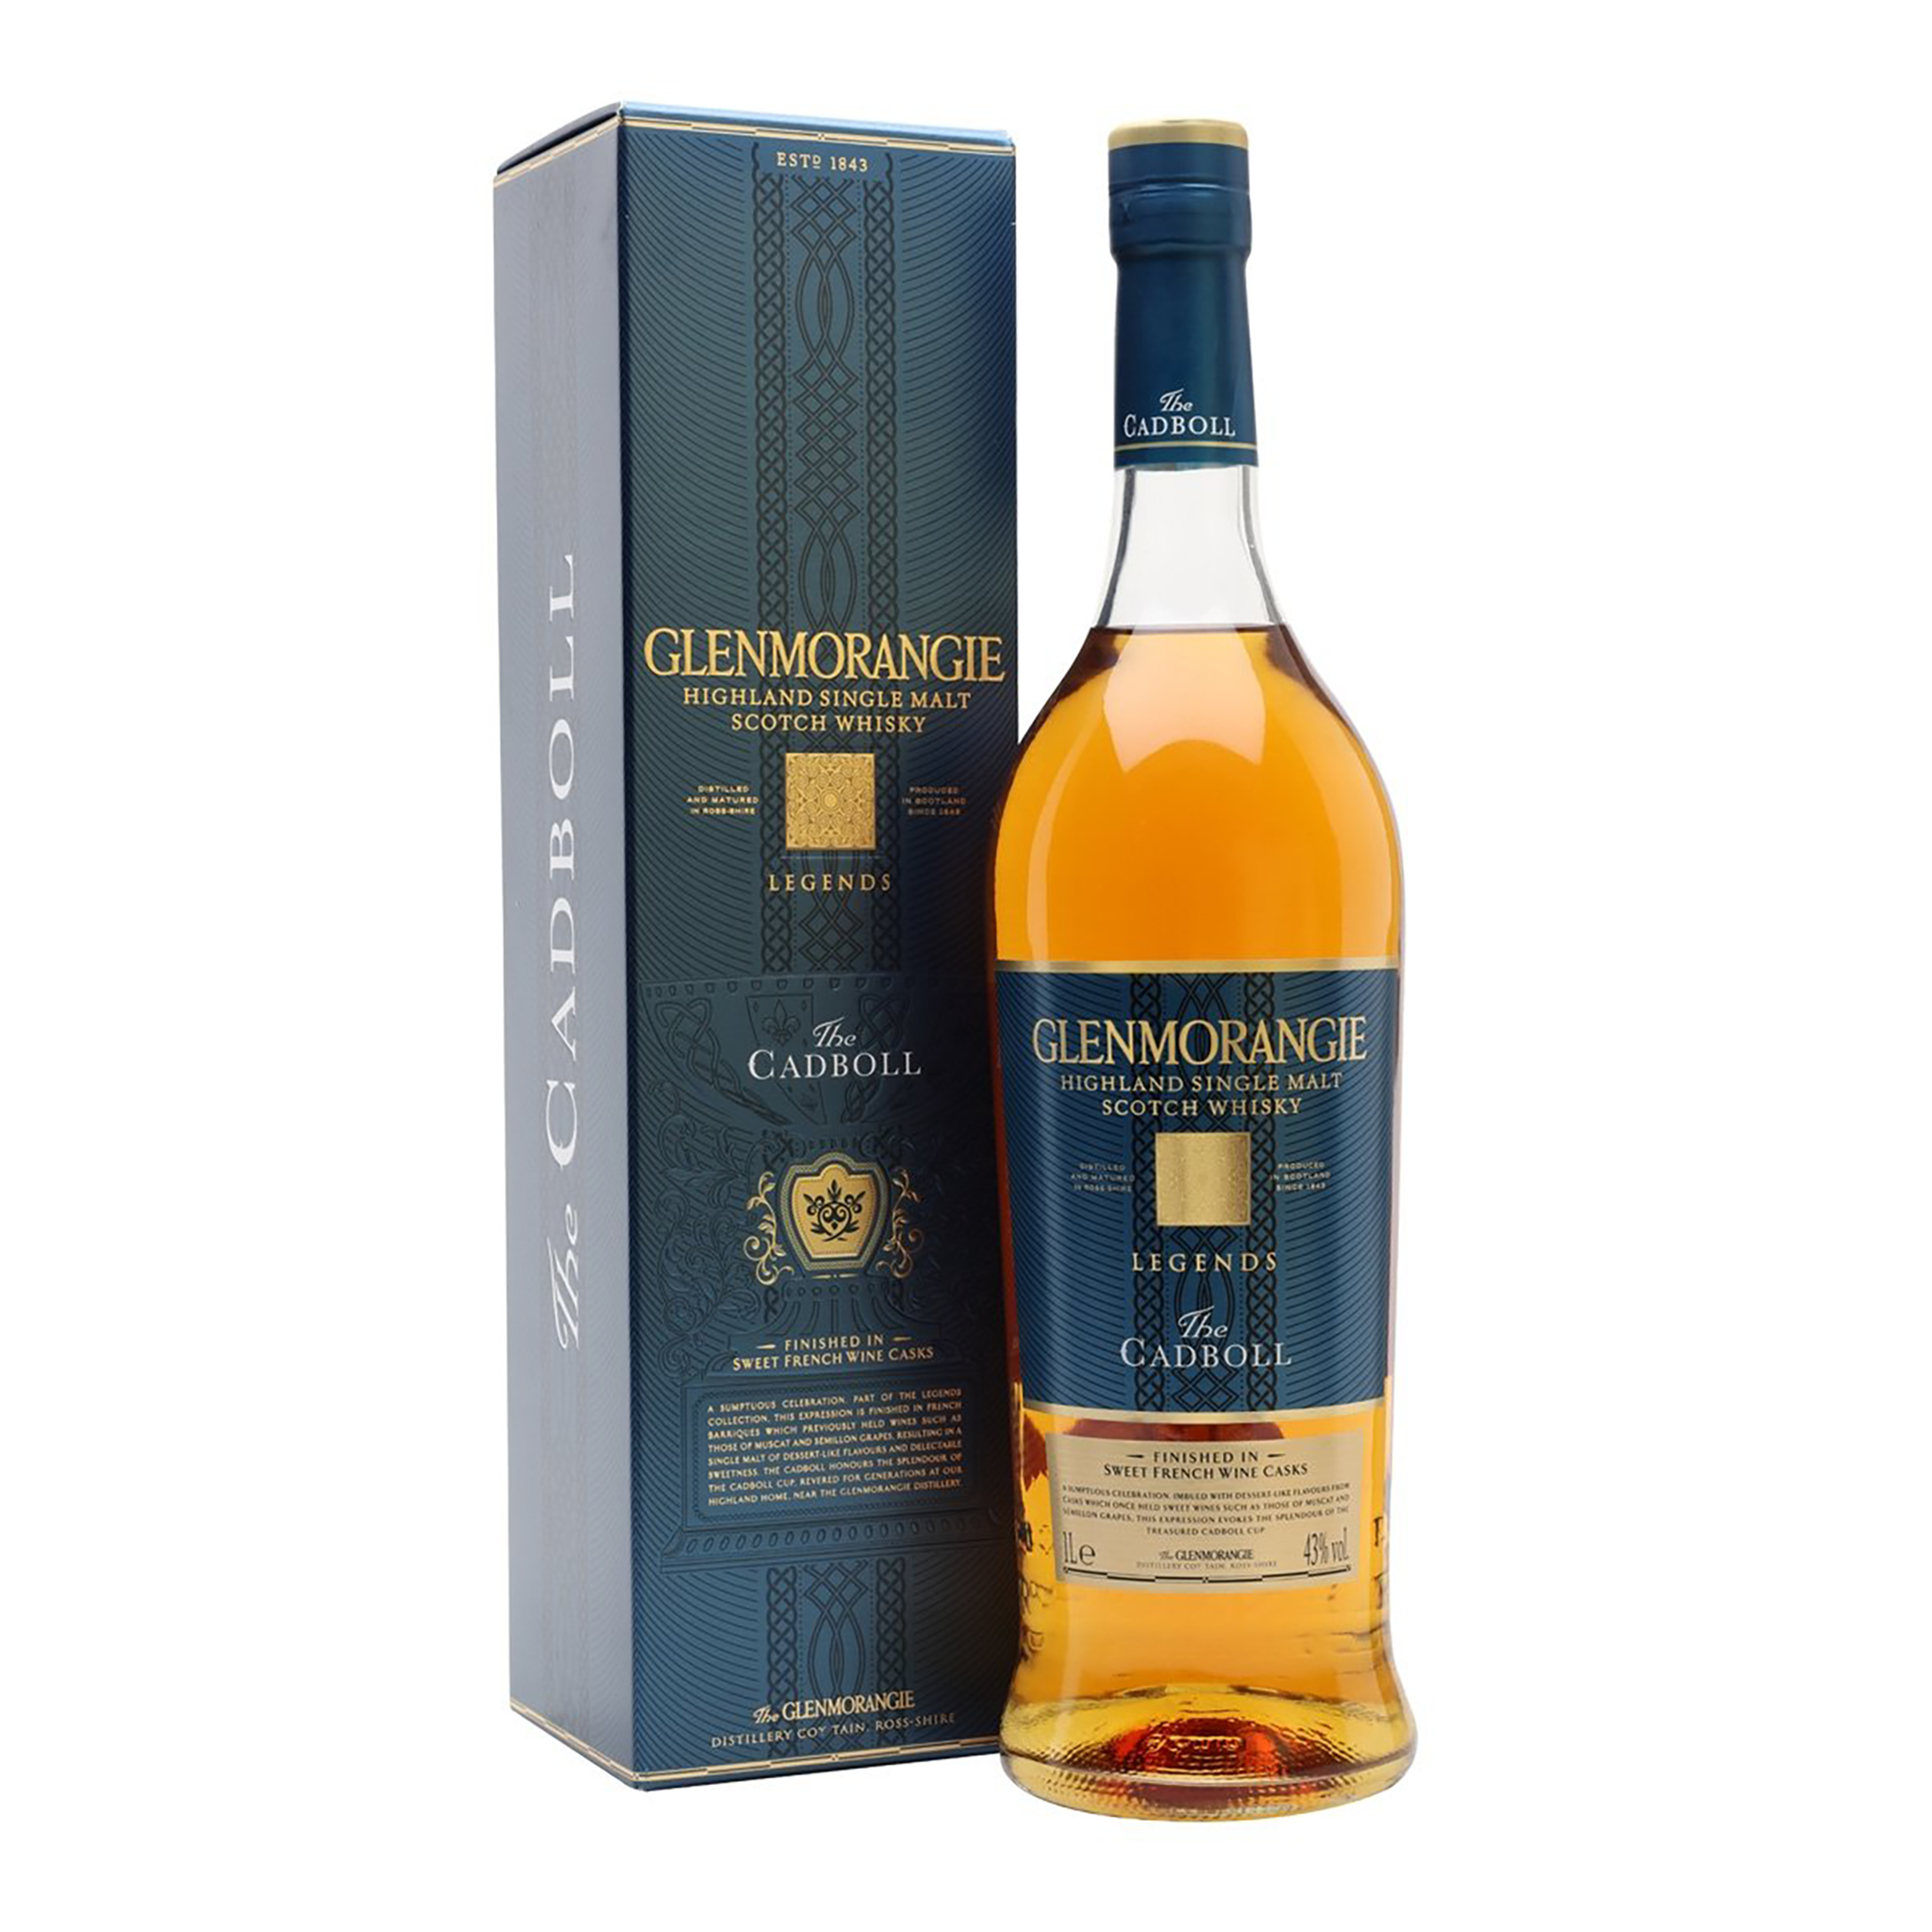 Glenmorangie Legends The Cadboll Single Malt Scotch Whisky 1L - Kent Street Cellars